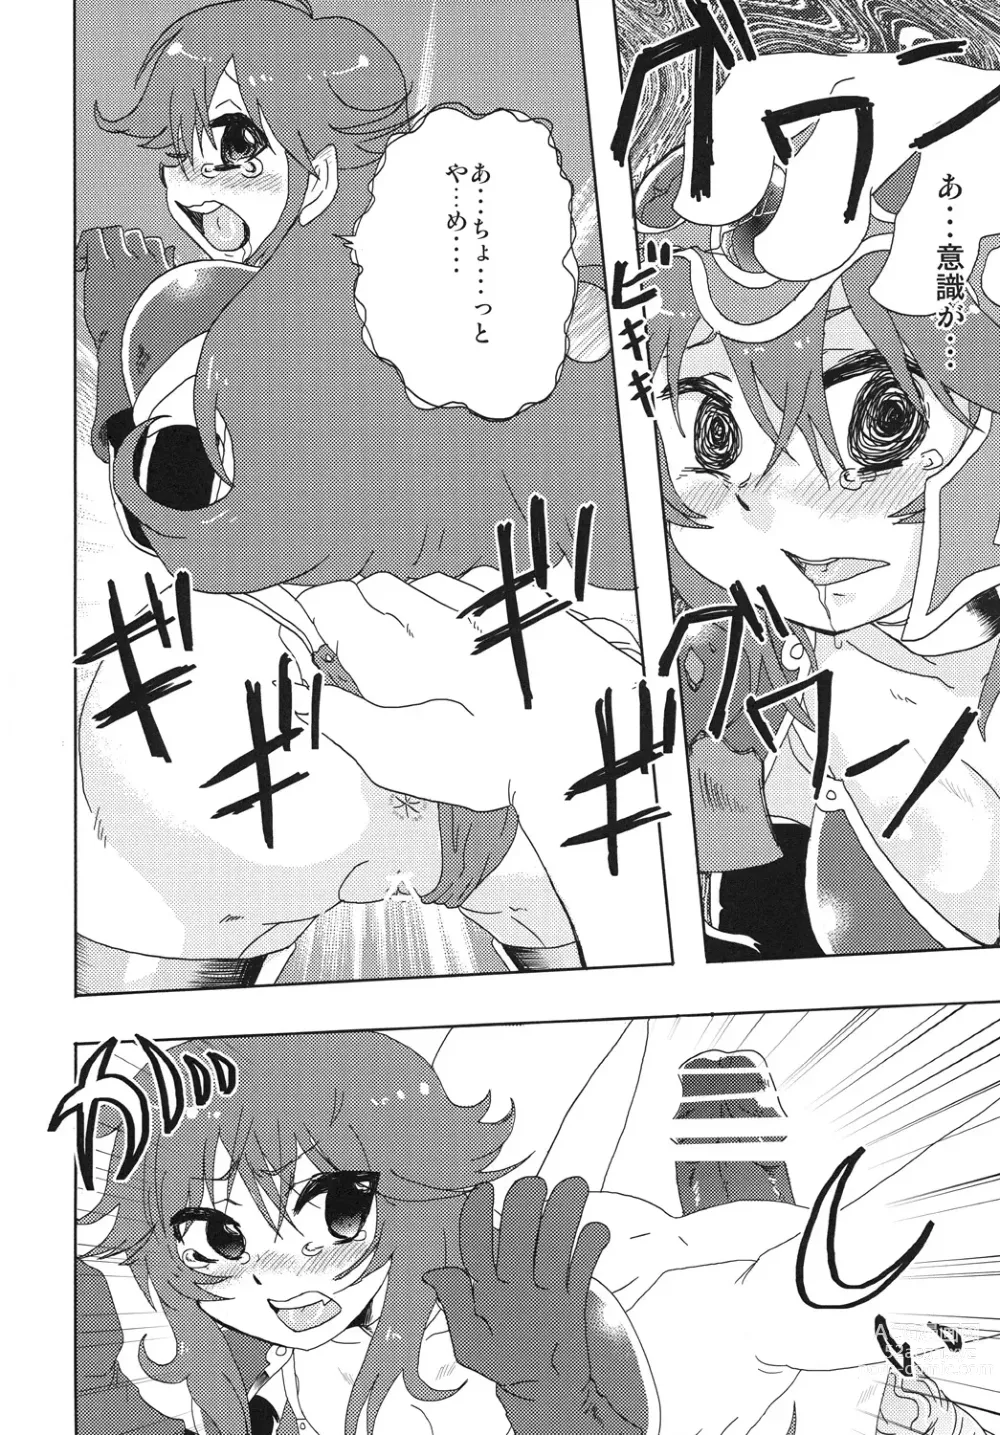 Page 7 of doujinshi However... Gang R***ed...